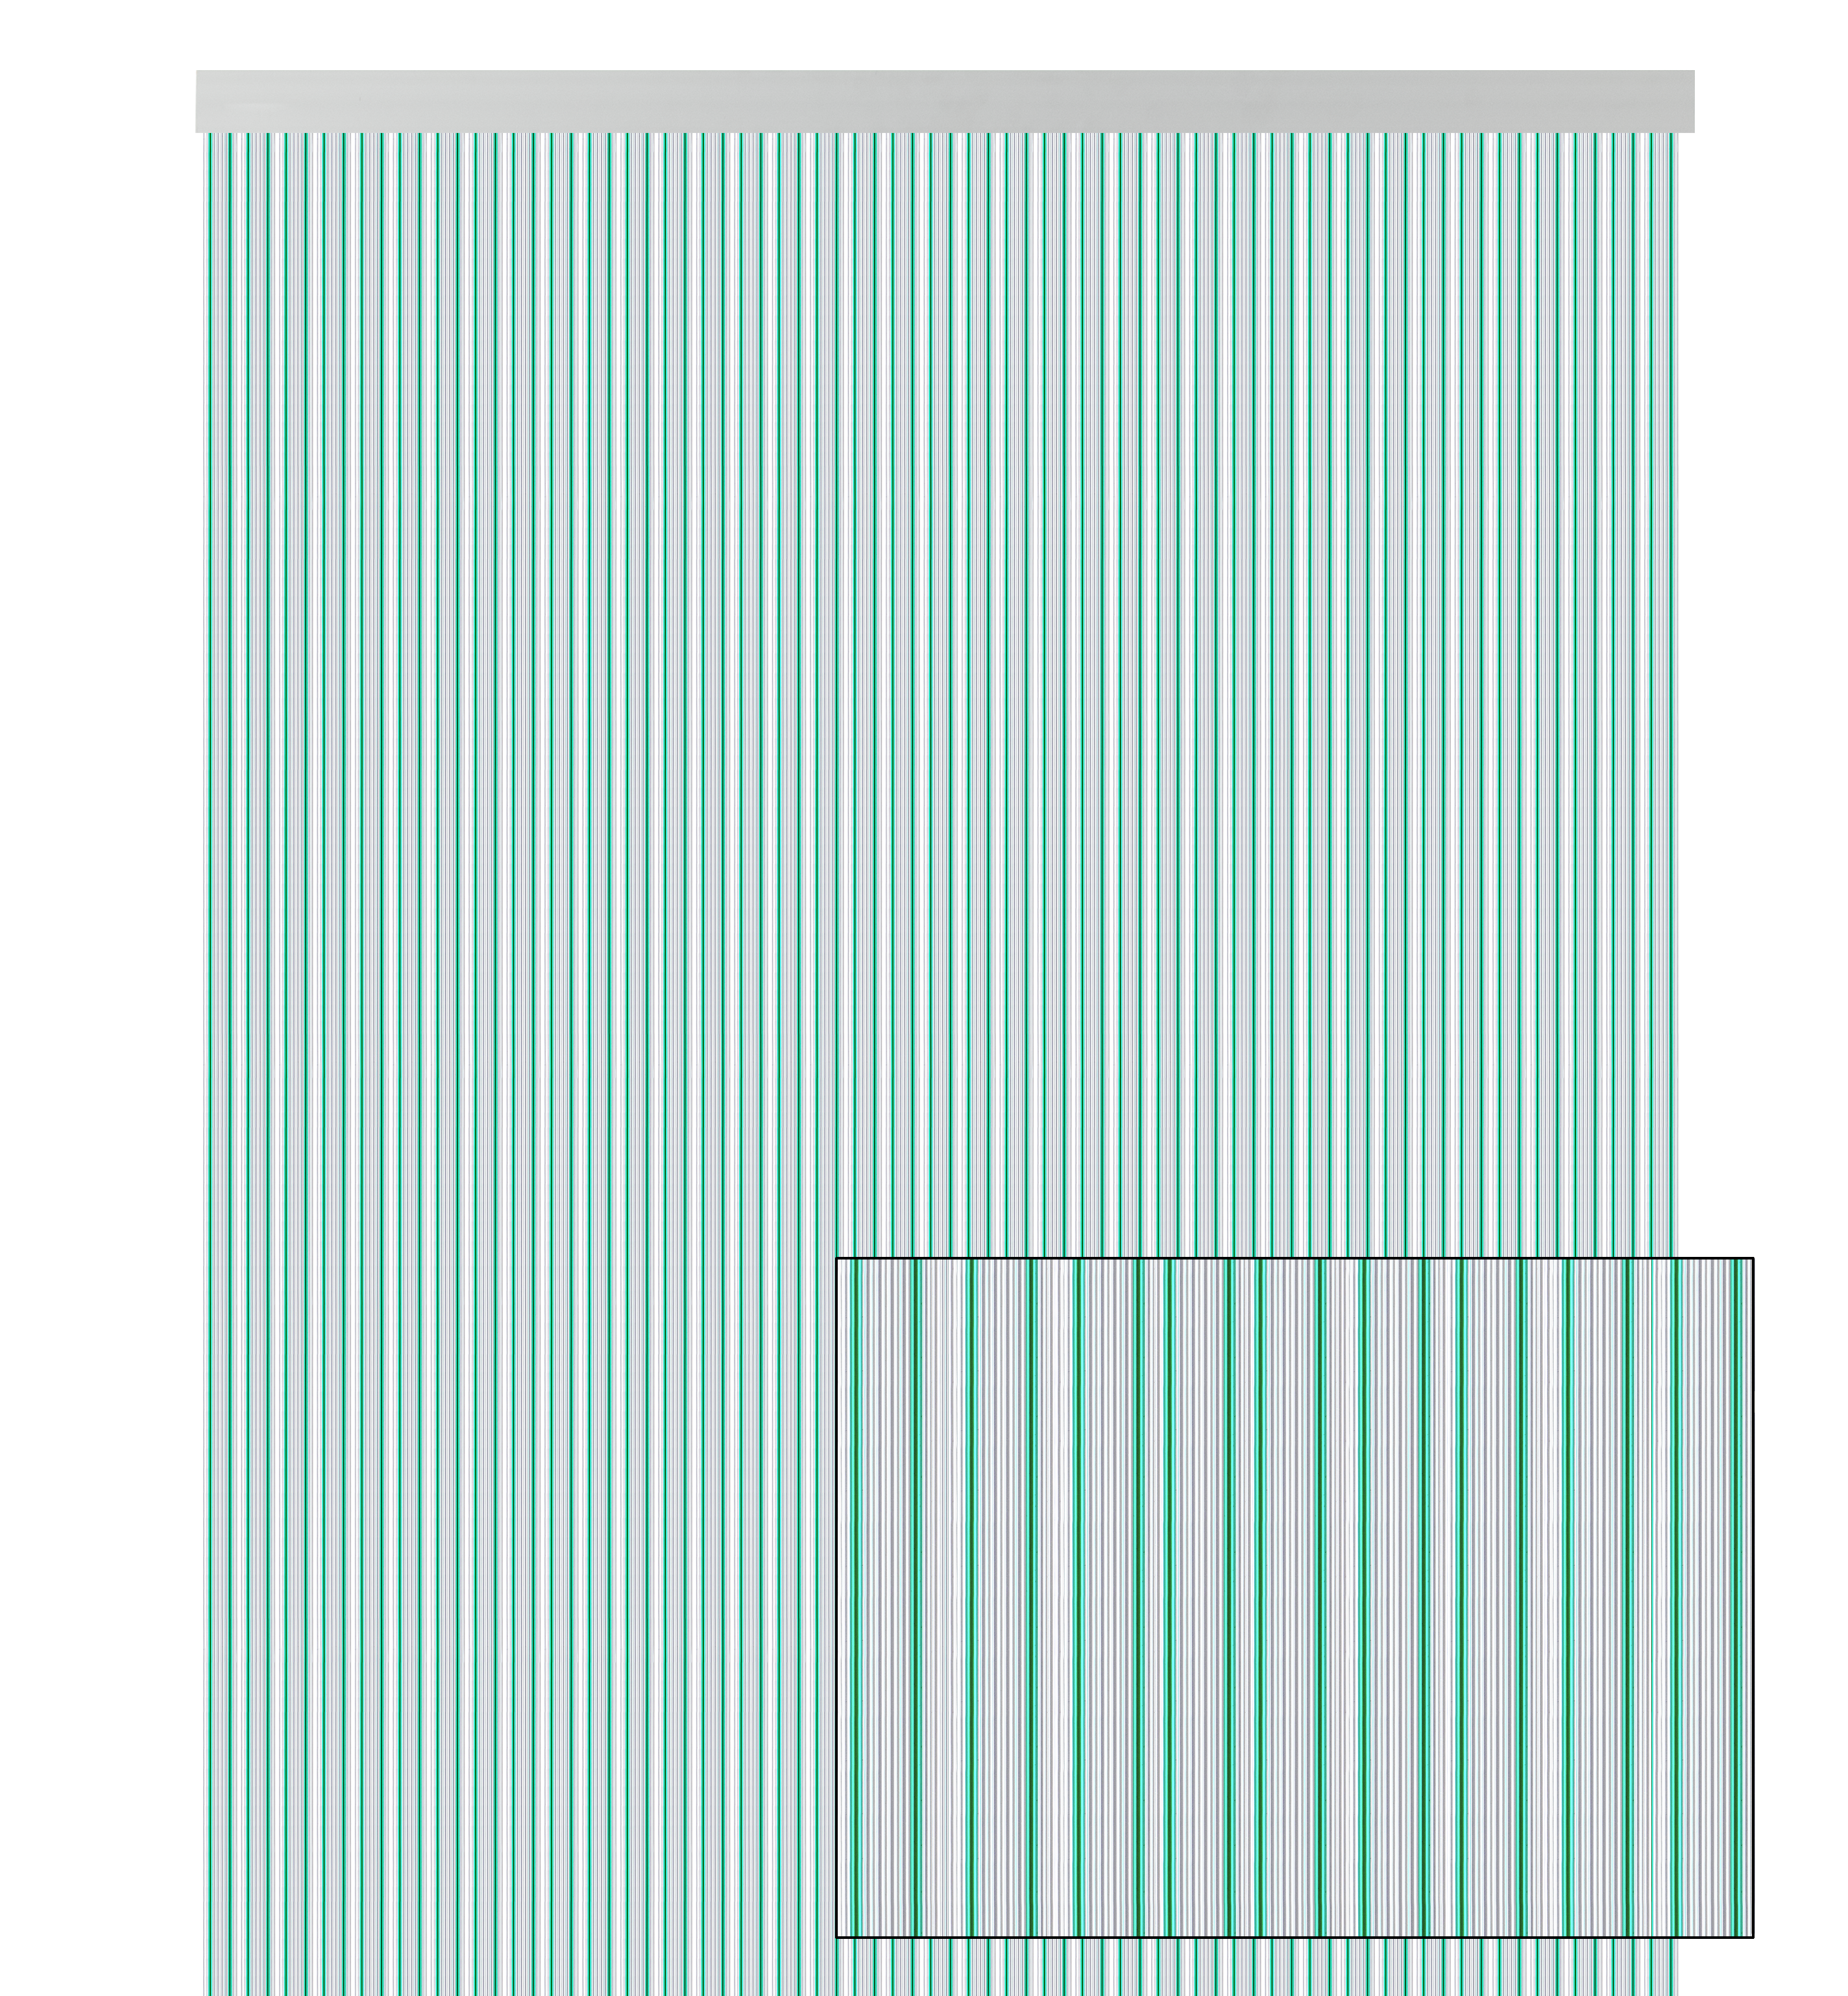 Cortina de puerta pvc ferrara verde-transparente 90 x 210 cm